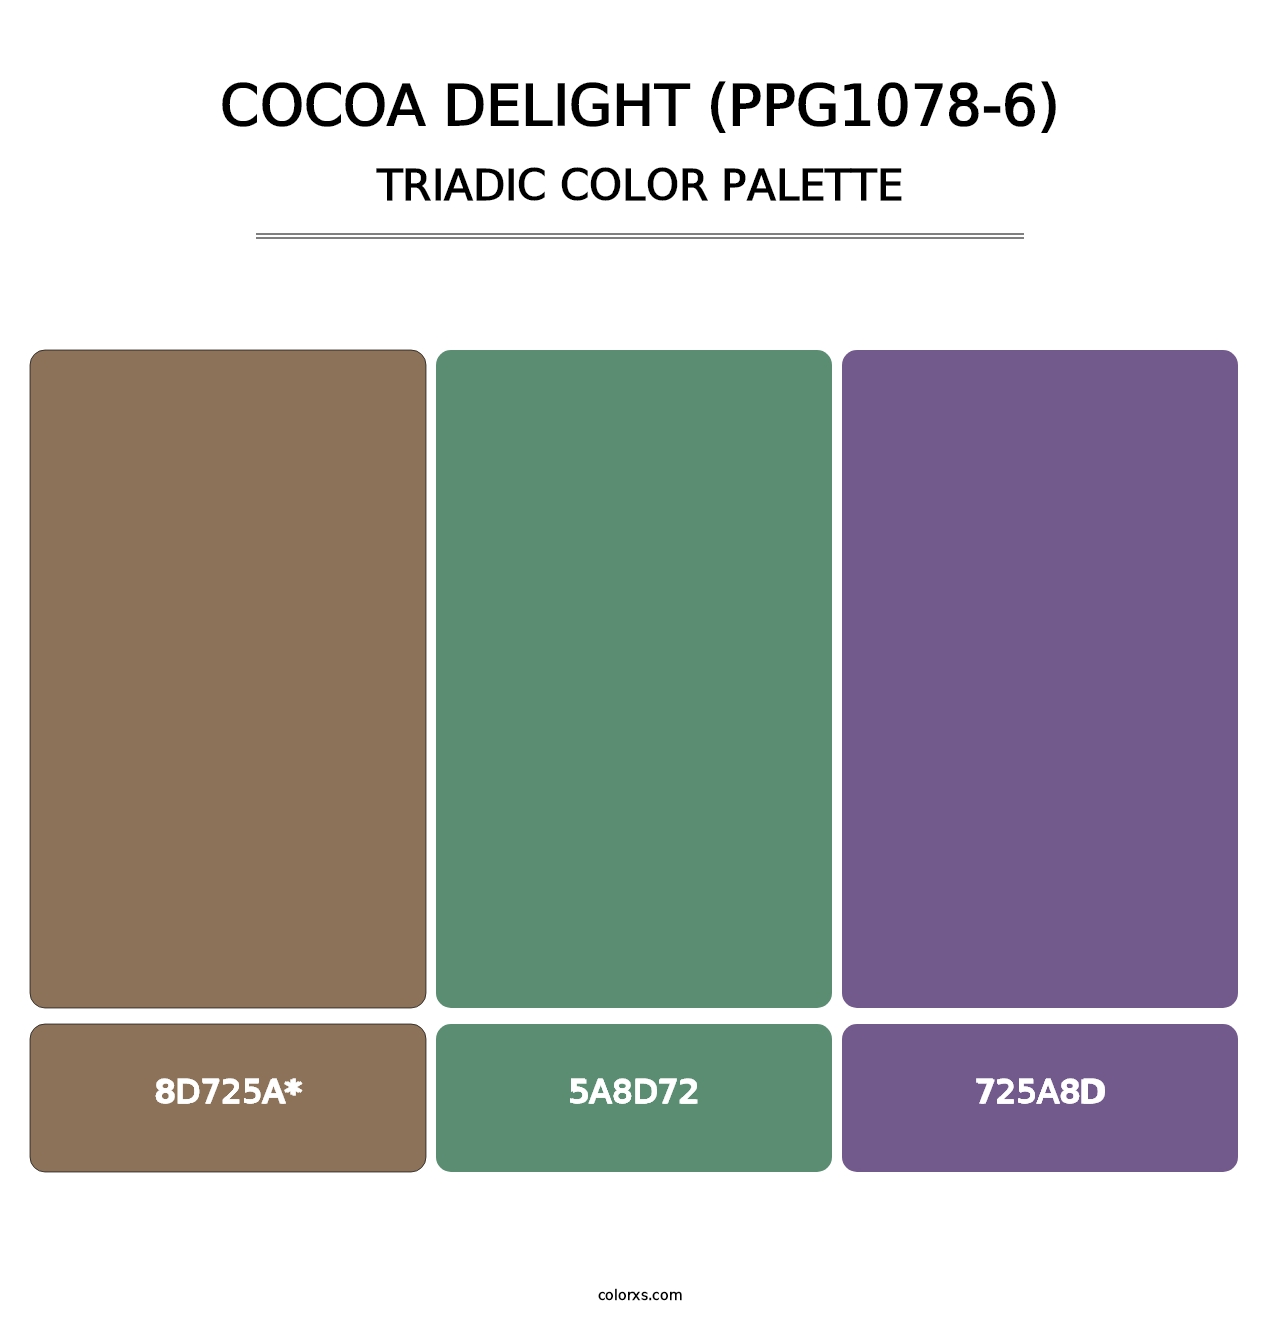 Cocoa Delight (PPG1078-6) - Triadic Color Palette